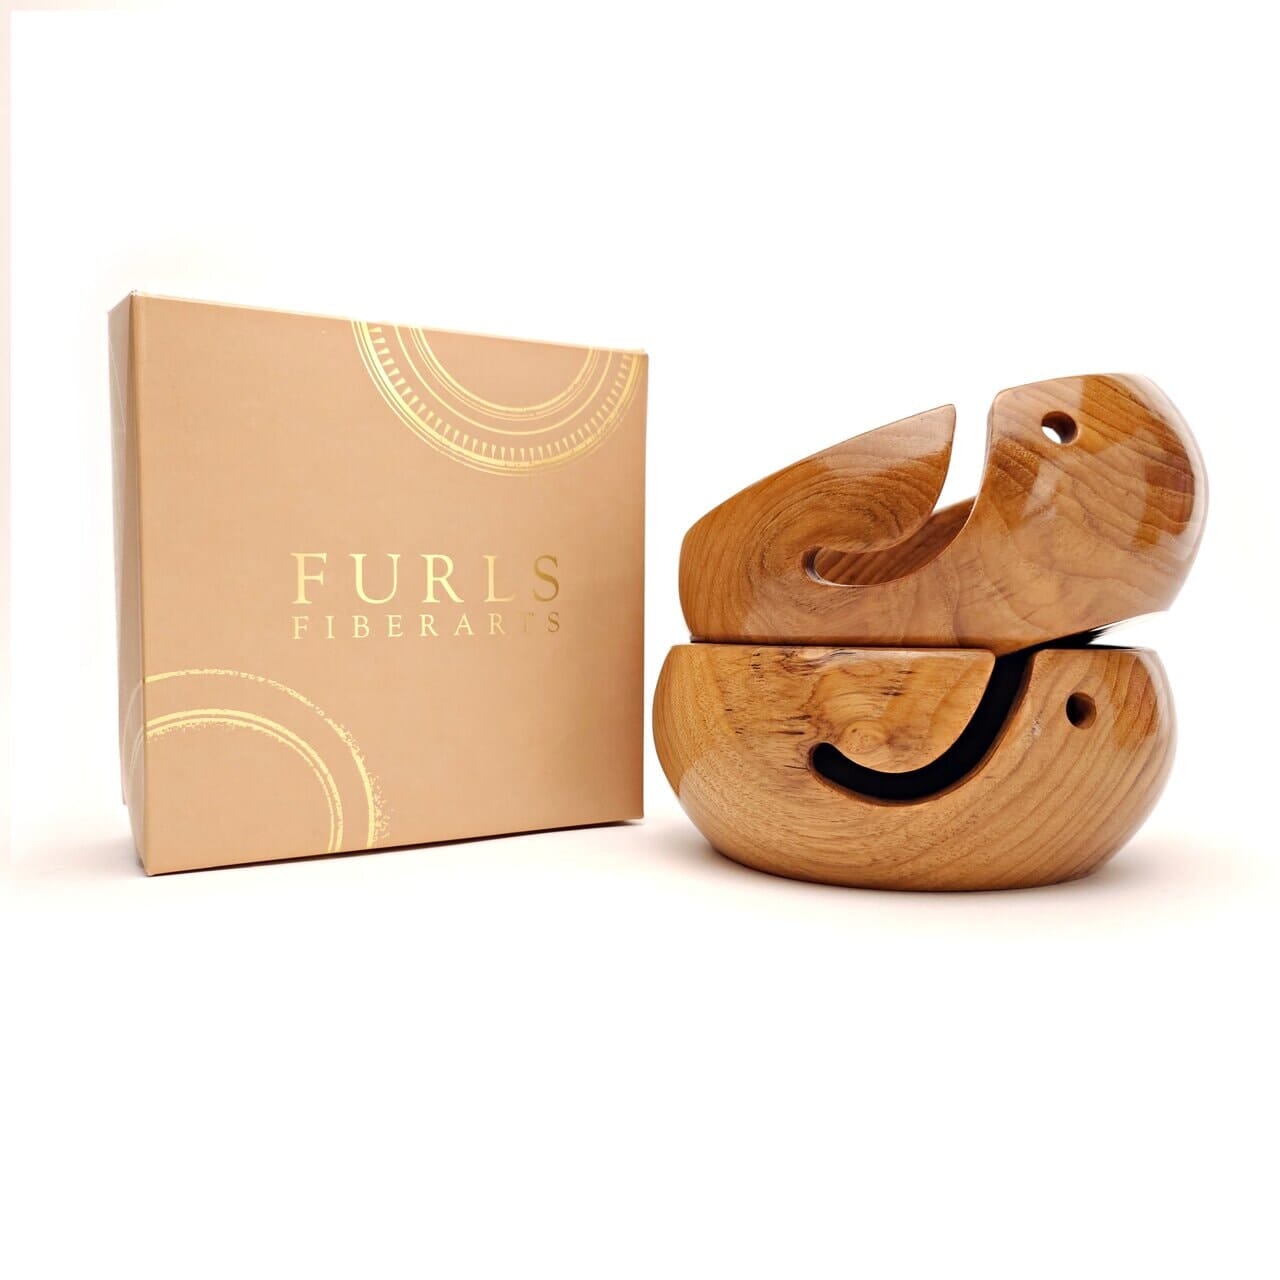 Furls Fiberarts Wooden Yarn Bowl Giveaway! - Repeat Crafter Me